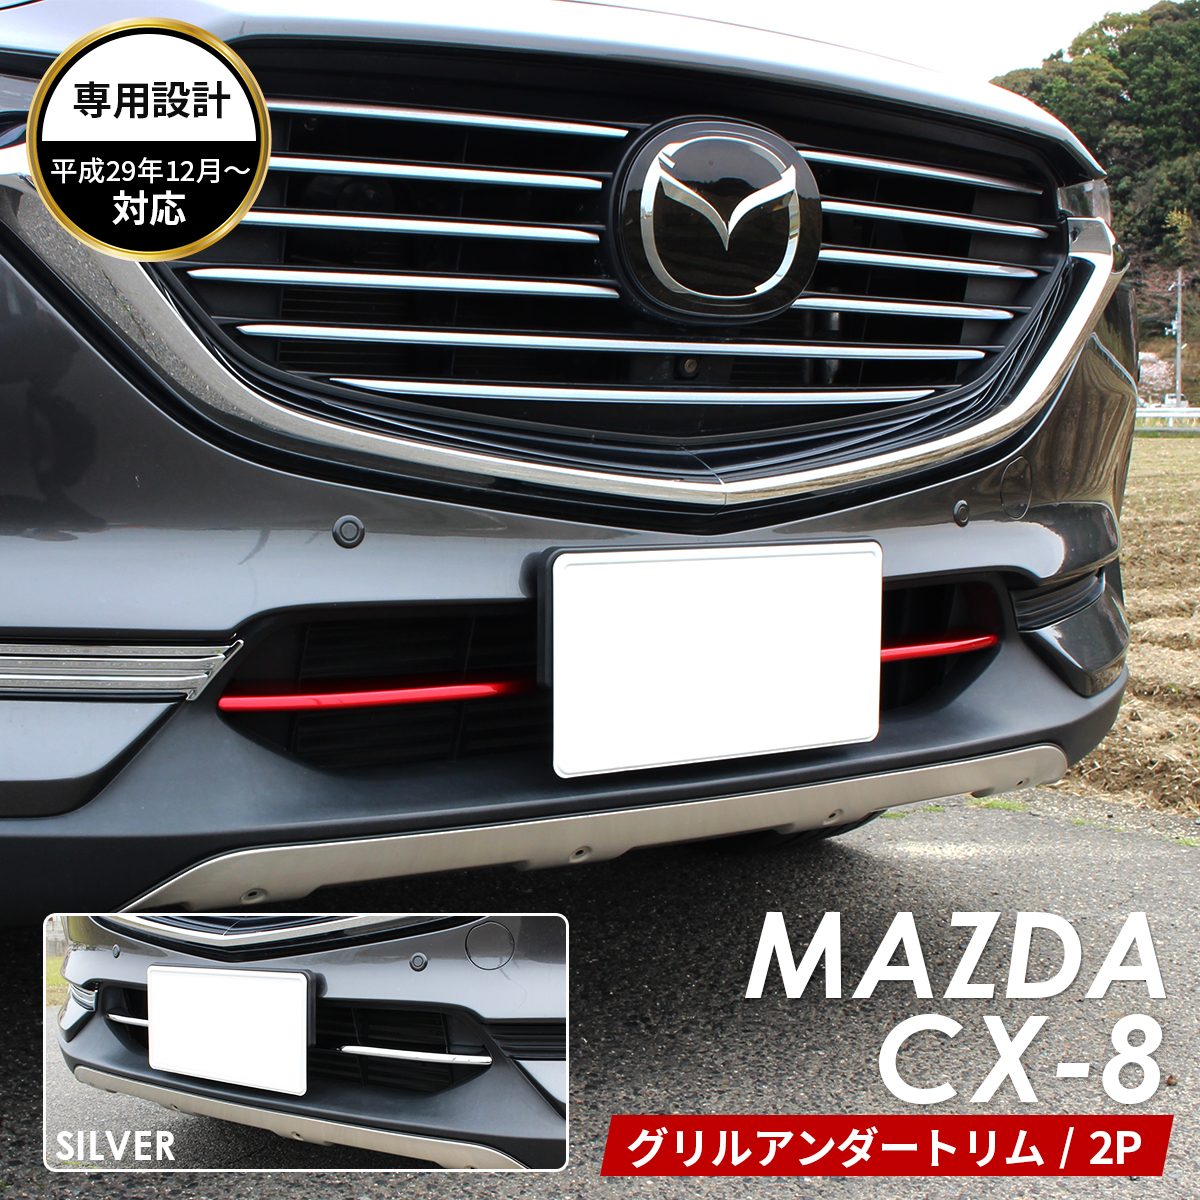 MAZDA マツダ CX-8 アクセサリ グリル アンダー トリム レッド シルバー グリルガード グリルカバー グリル ガーニッシュ 鏡面仕上げ  車種 専用設計